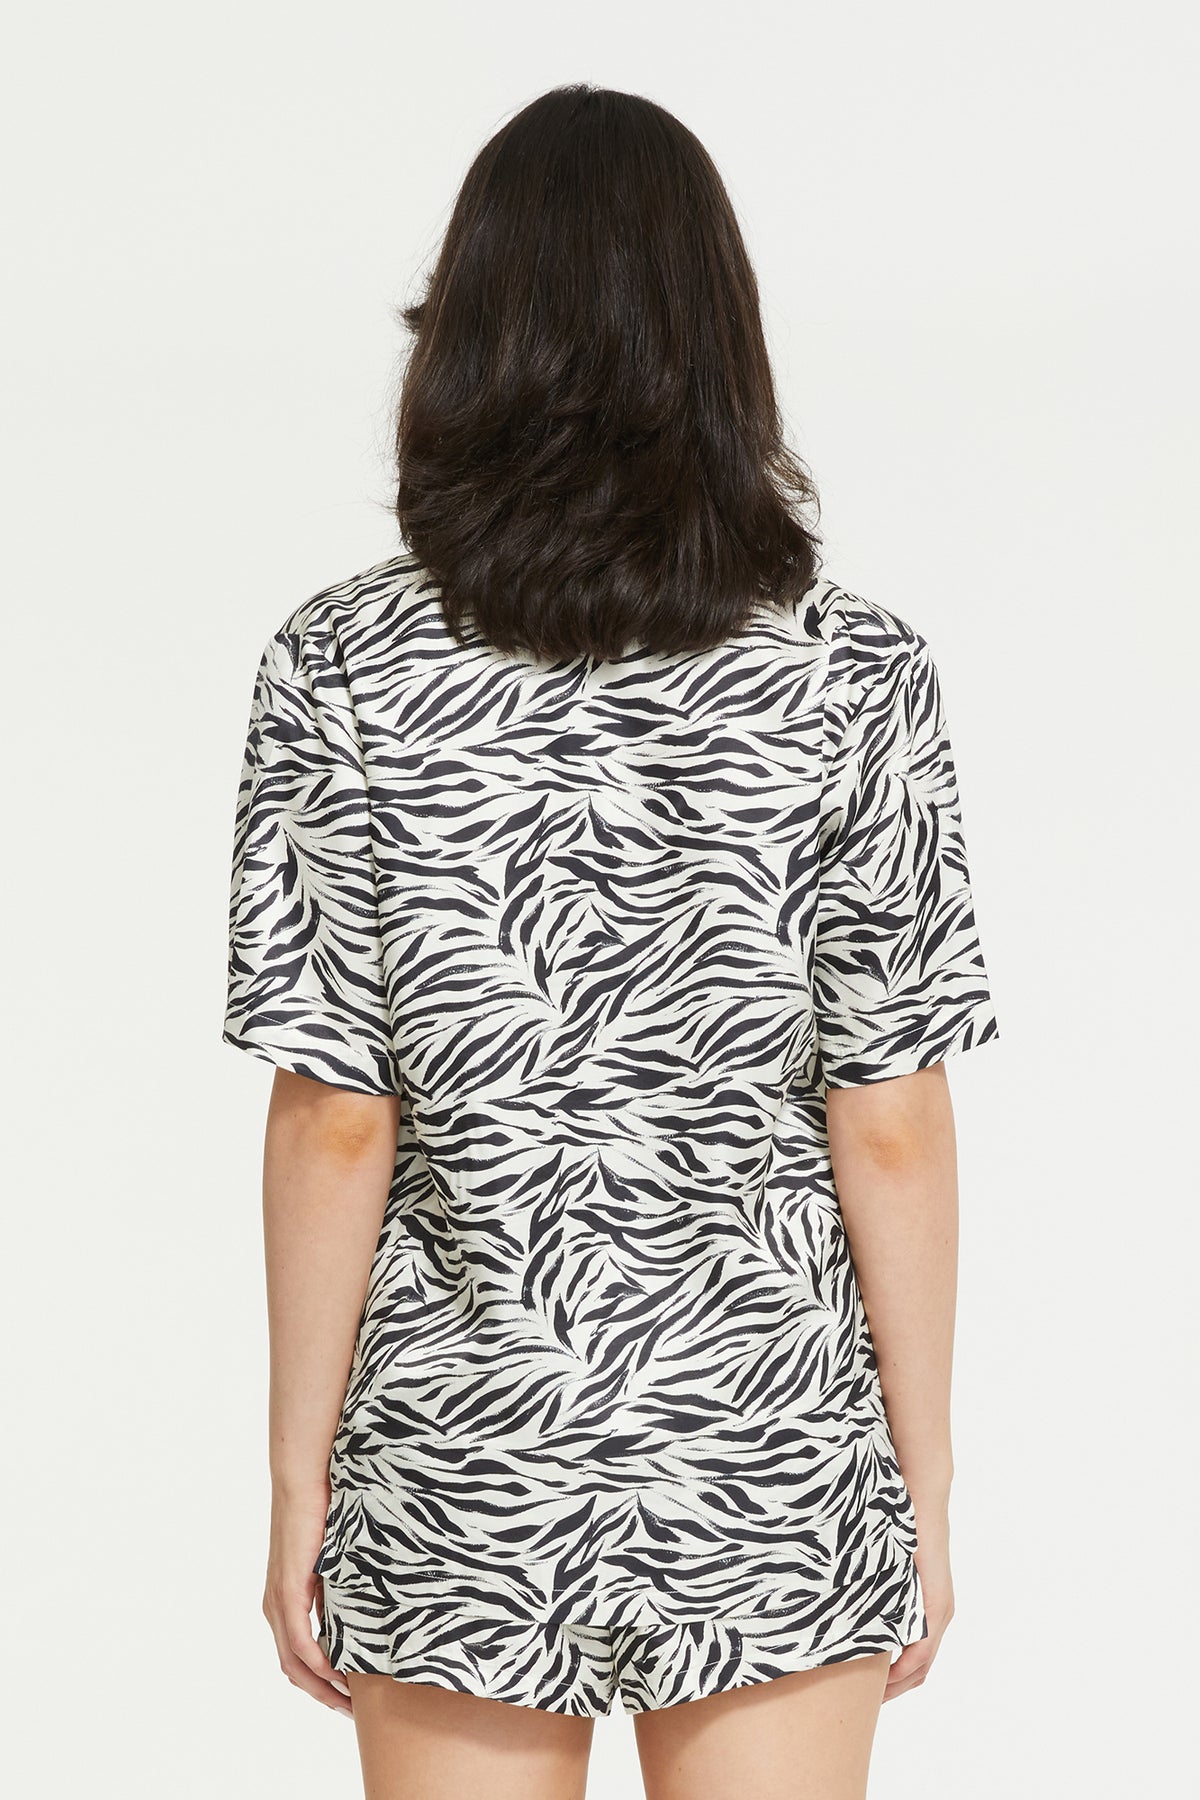 The Zafina Short Sleeve Top in Brush Zebra Print by Ginia